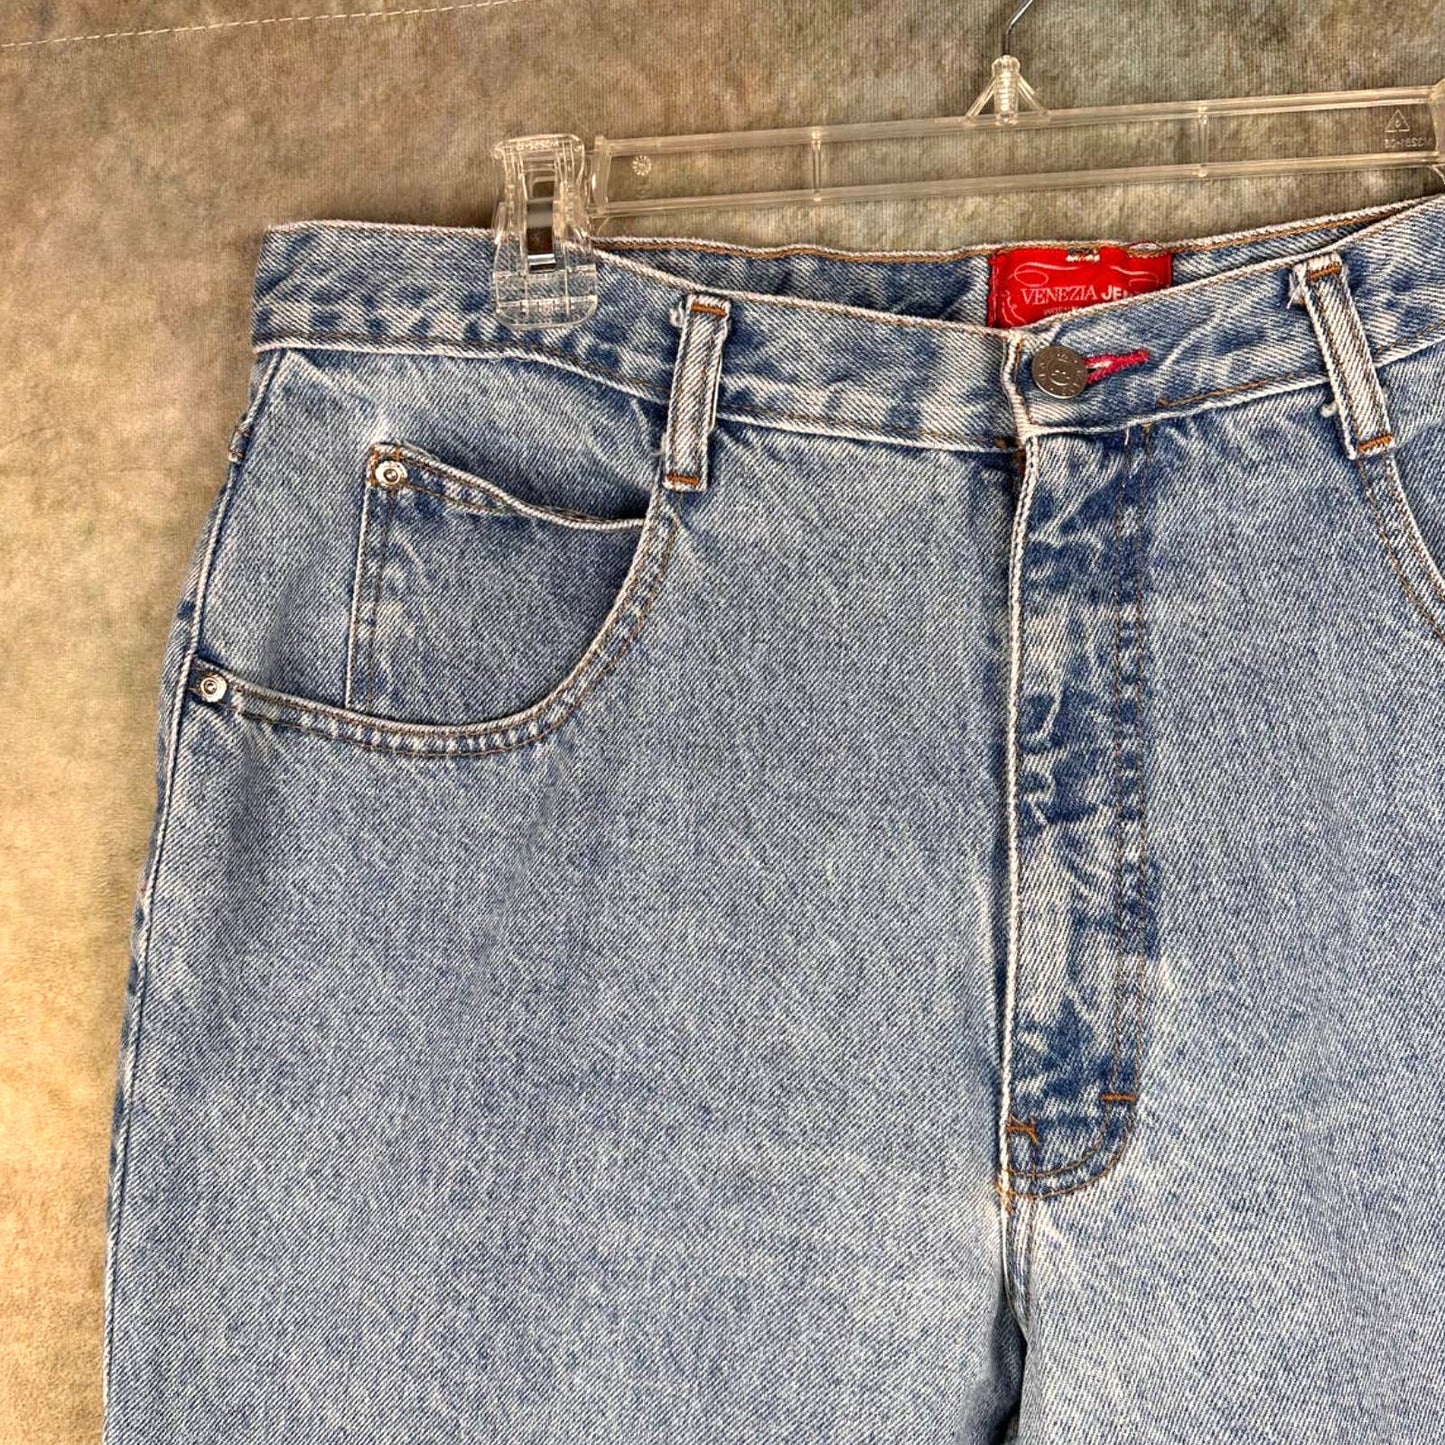 Vintage Denim Jeans Sz 18 USA Made Mom Jeans